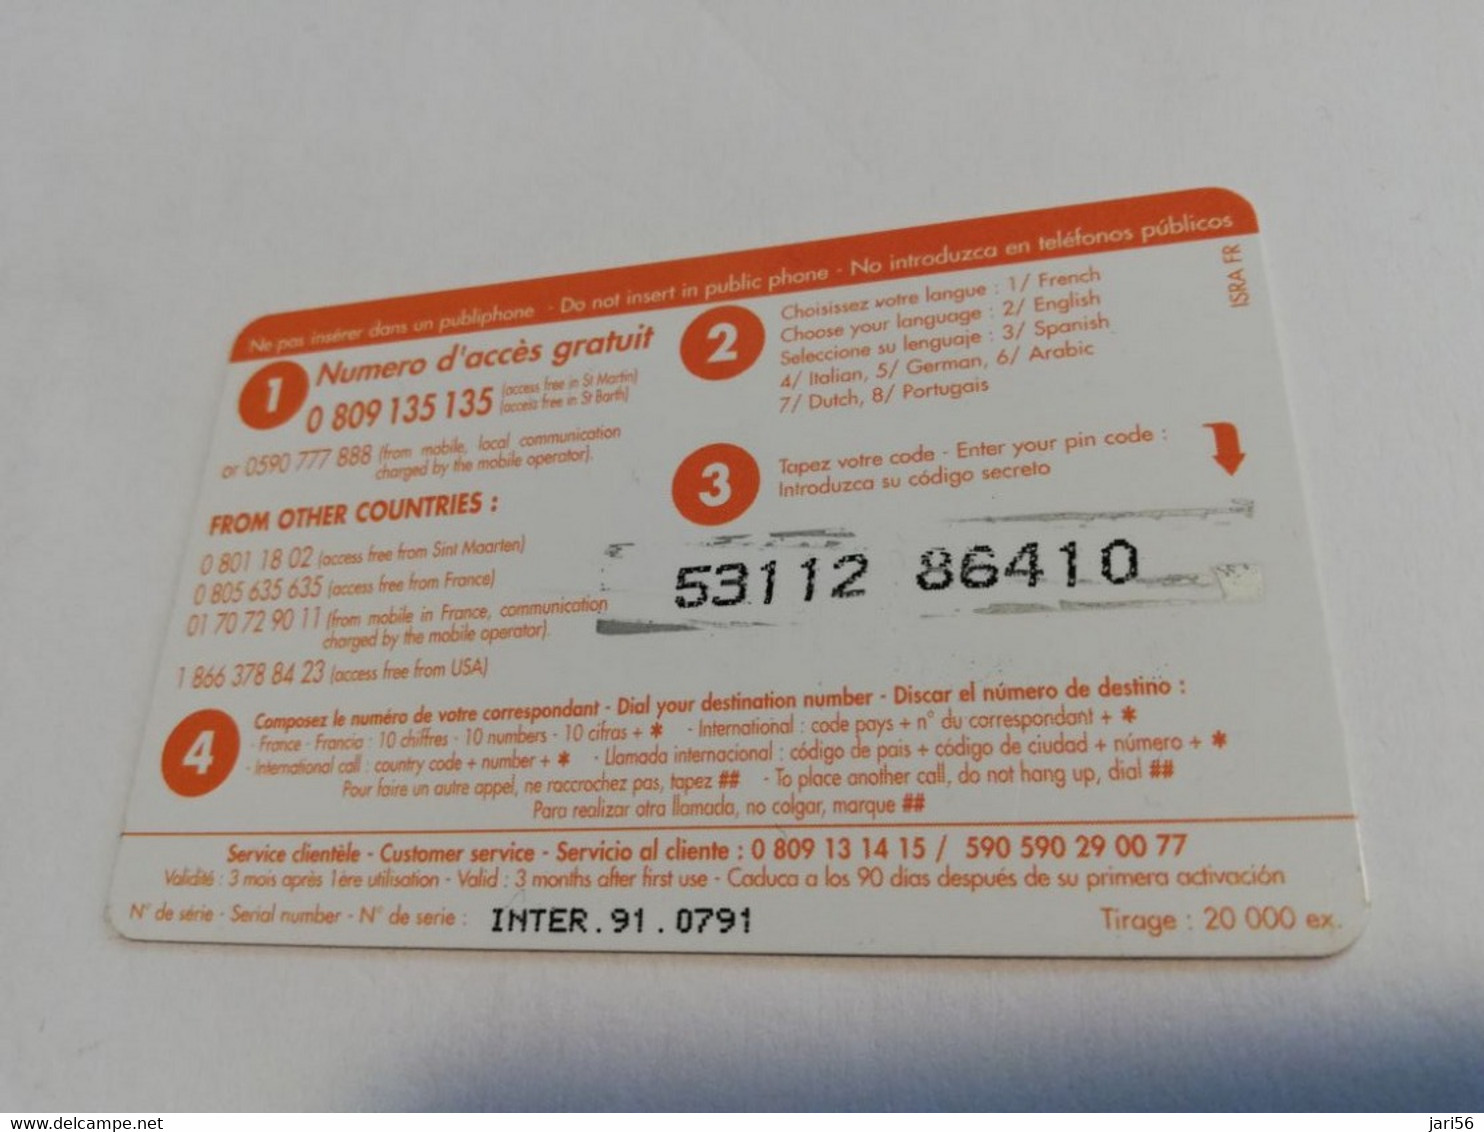 ST MARTIN / INTERCARD  3 EURO  OCTROI DE COLE BAY           NO 091   Fine Used Card    ** 6577 ** - Antilles (Françaises)